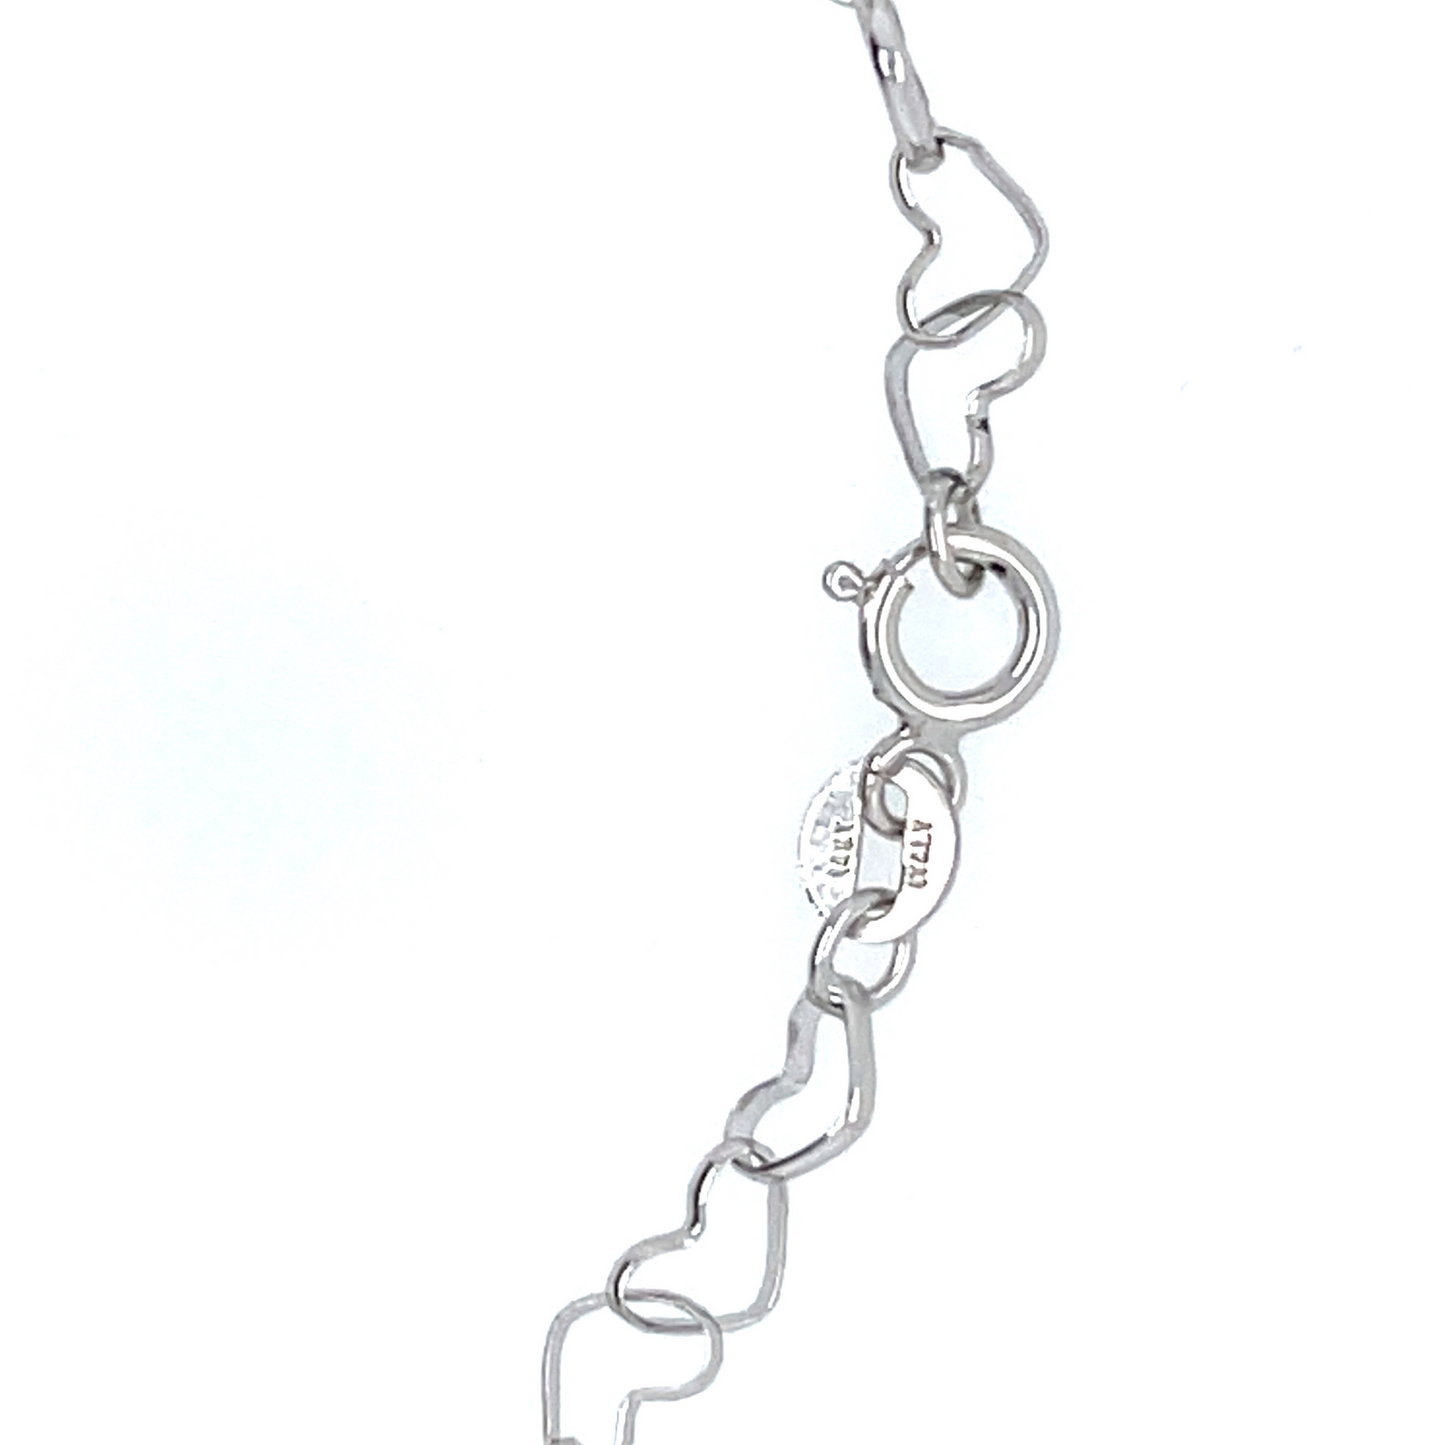 Interlocking Hearts chain bracelet